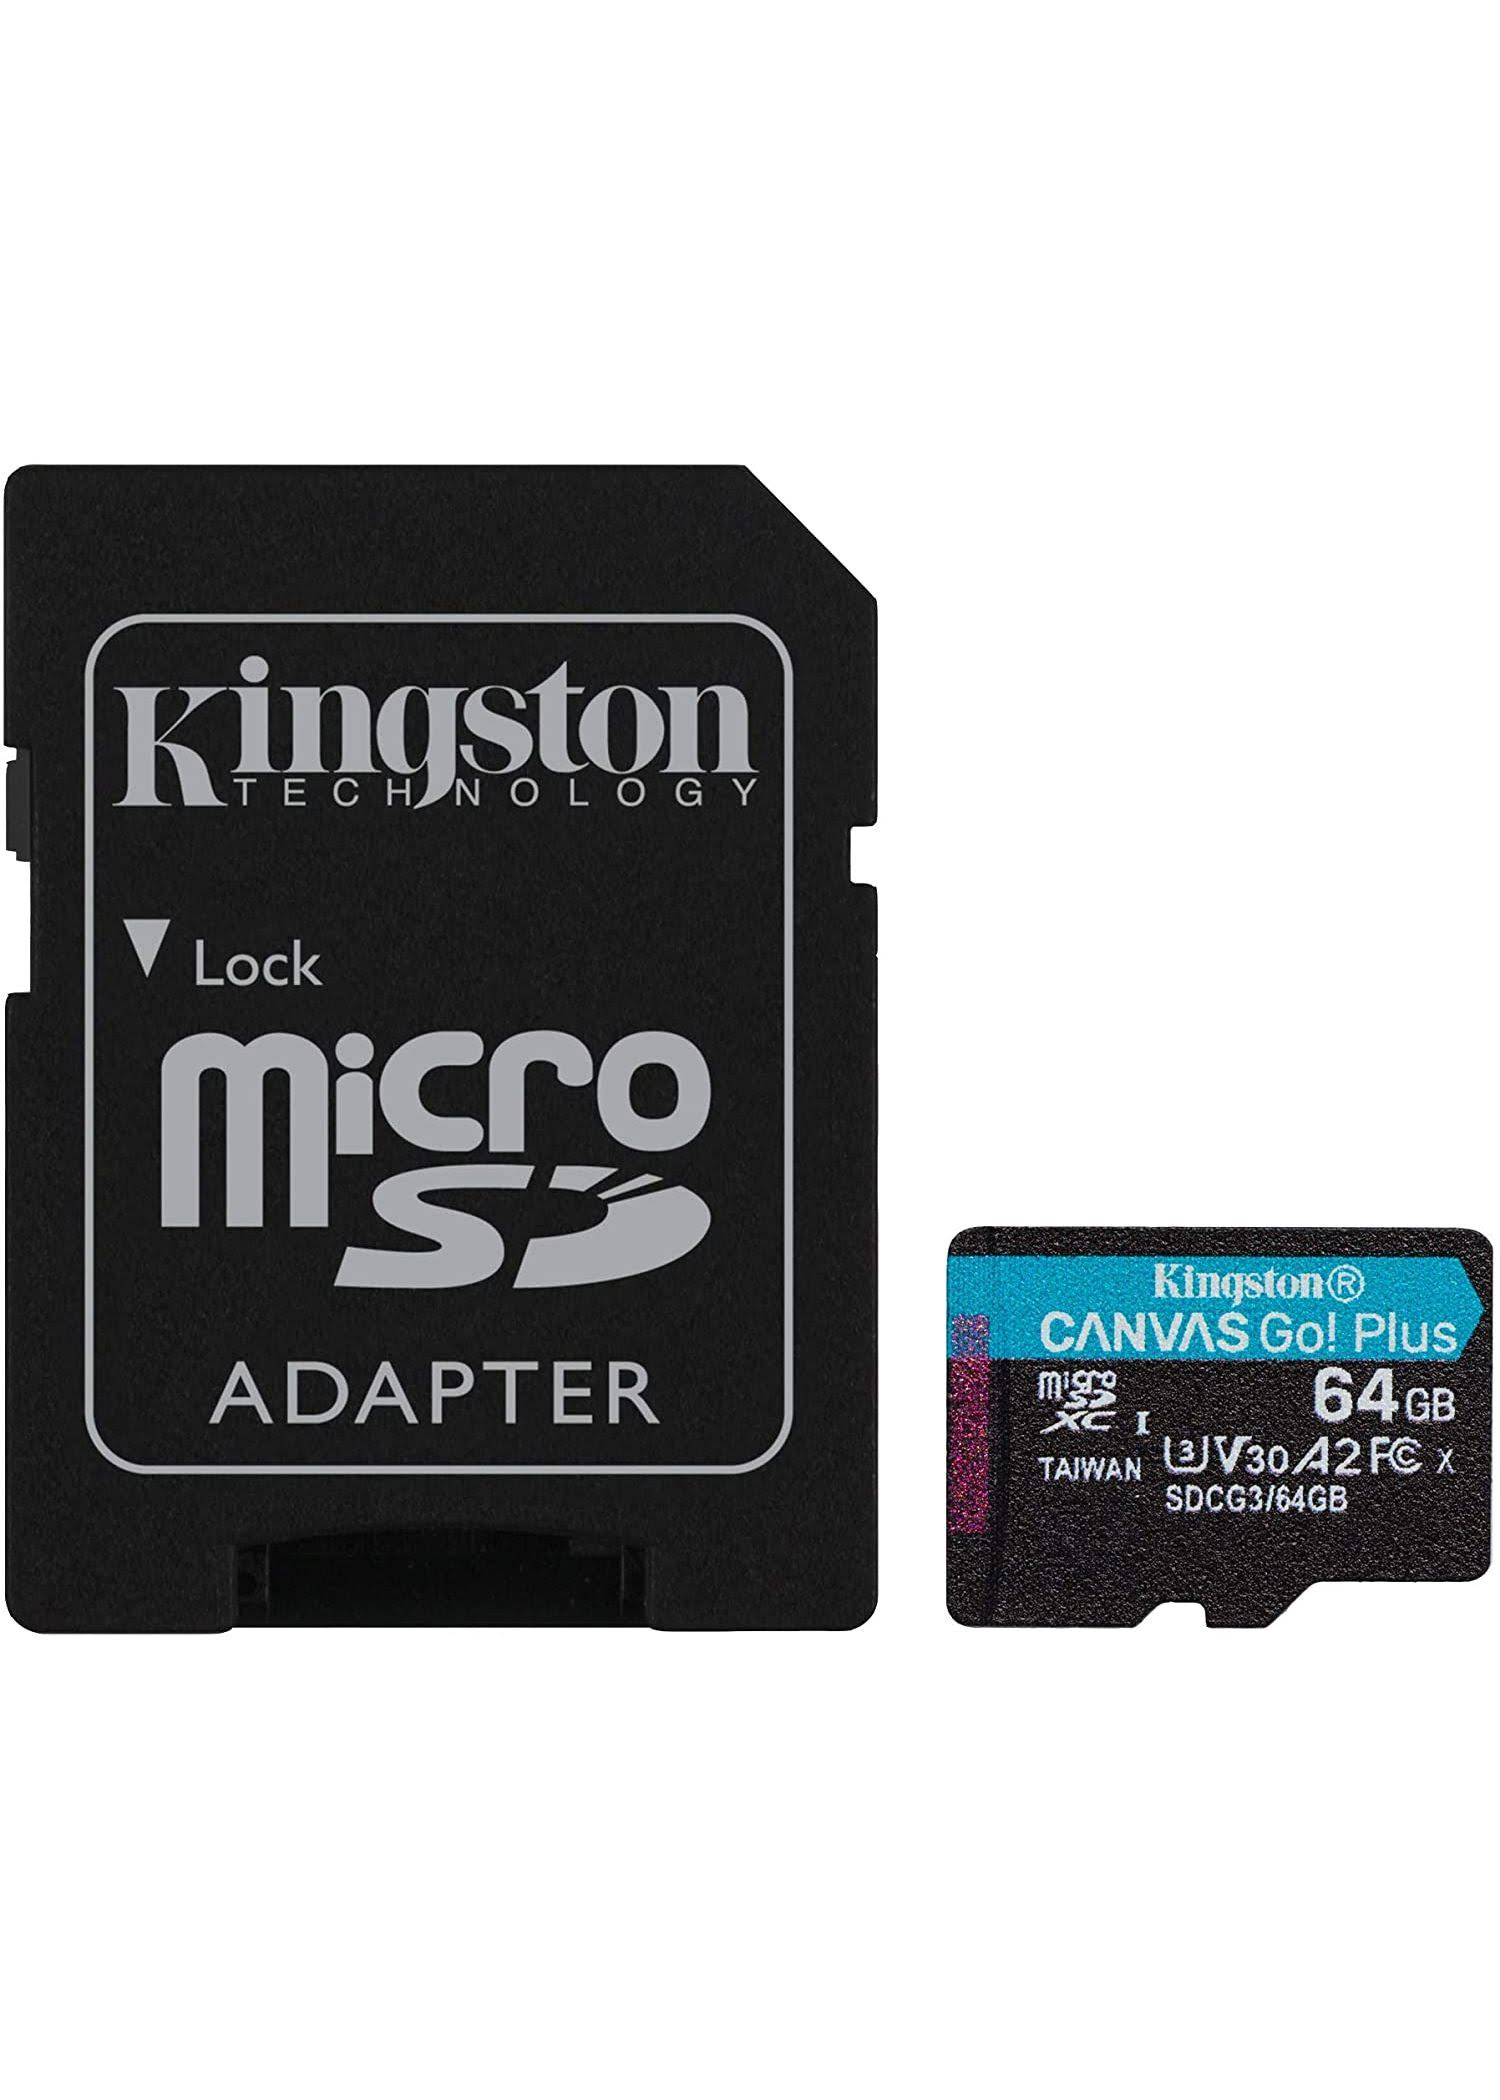 Kingston Canvas Go! Plus Memory Card 64 GB Microsd Class 10 UHS-I